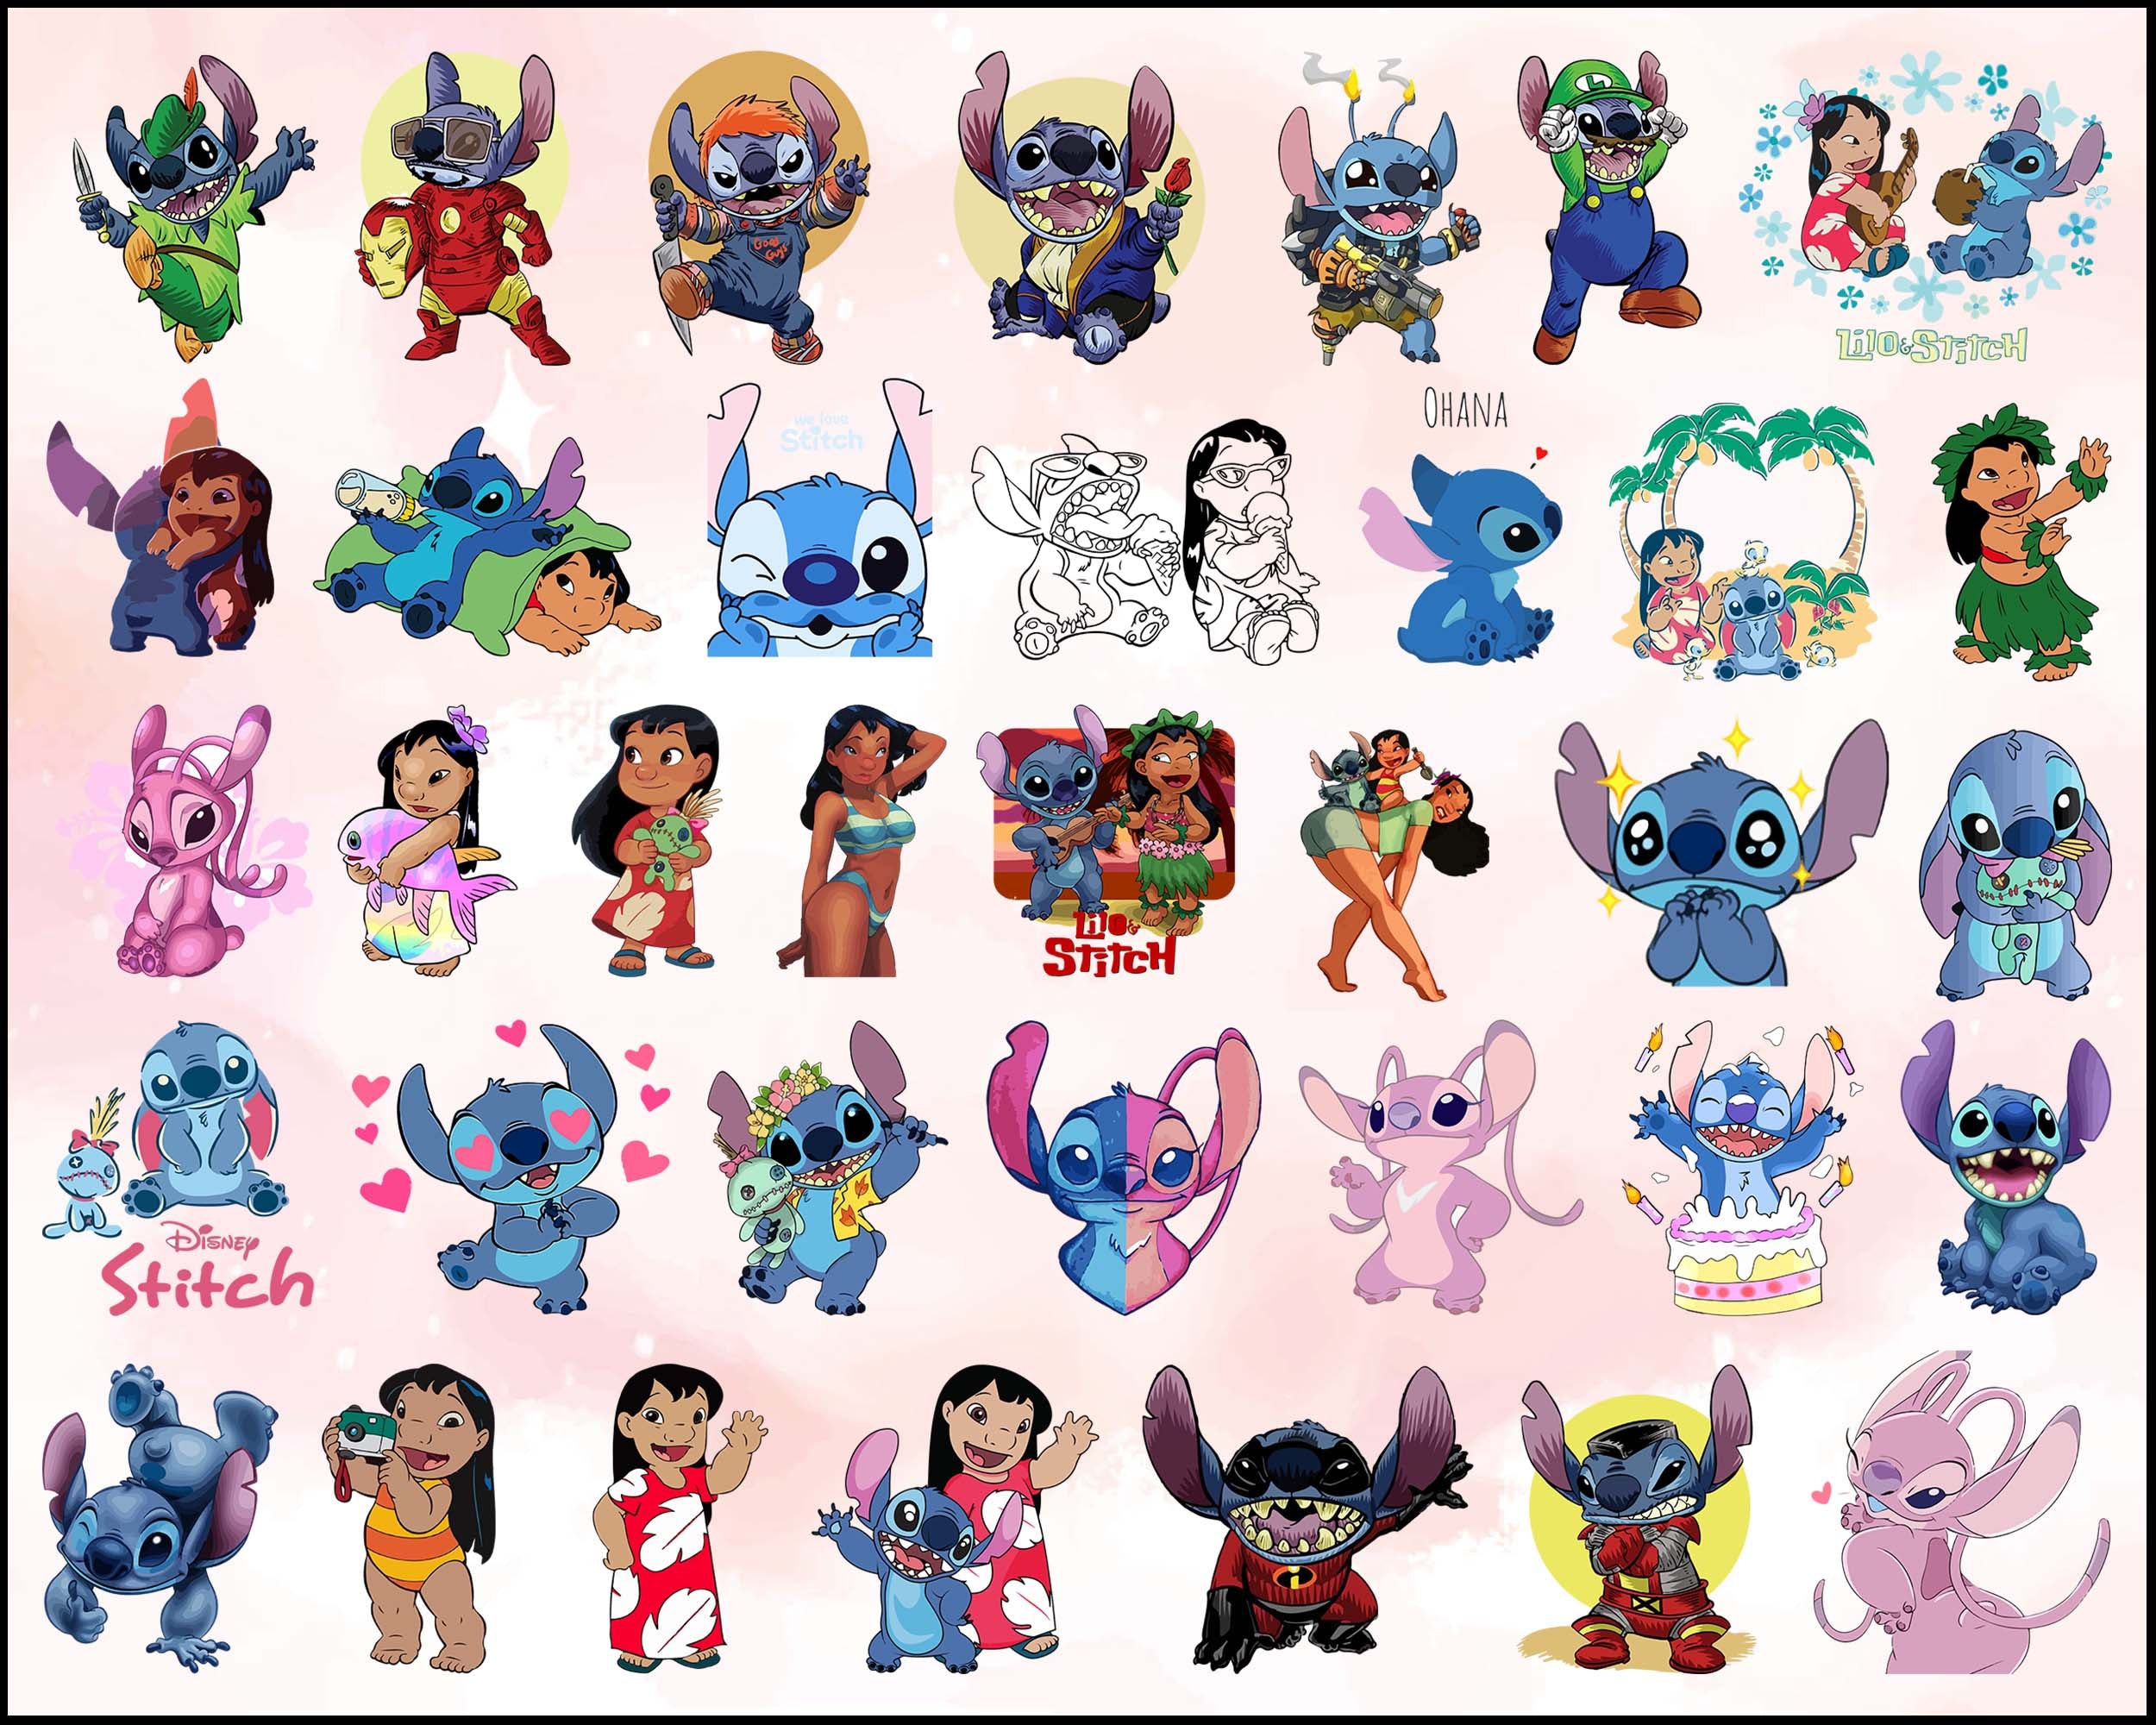 New Lilo And Stitch Bundles Svg, Disney Svg, Lilo And Stitch, Lilo Svg, Stitch Svg, Monster Svg, Little Girl Svg, Instant Download